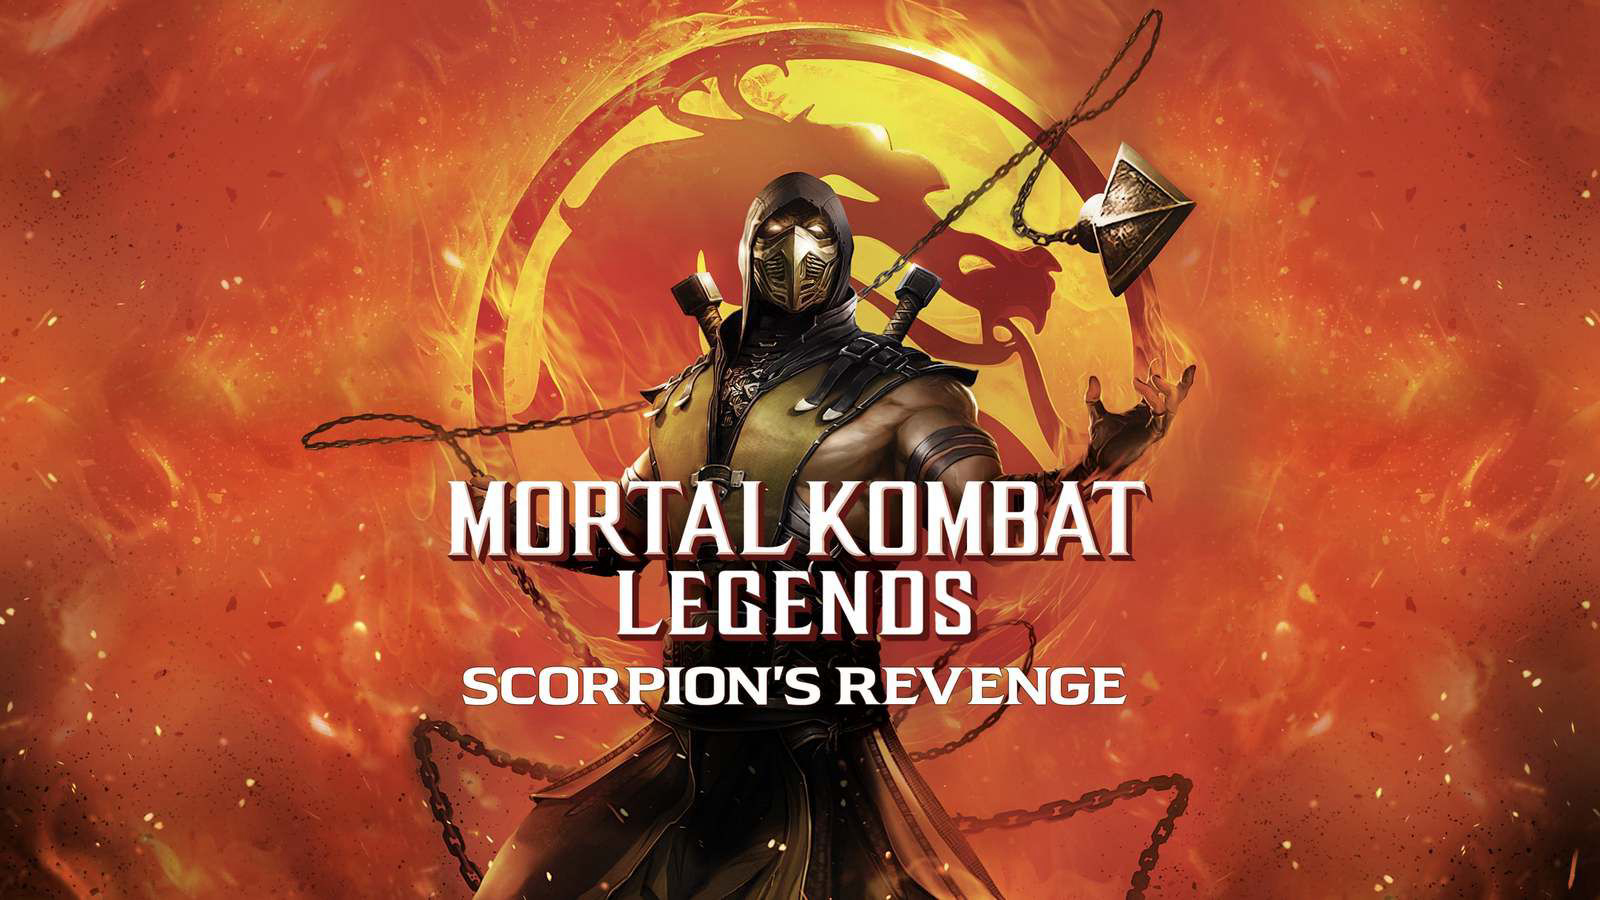 Huyền Thoại Rồng Đen: Scorpion Báo Thù Mortal Kombat Legends: Scorpion's Revenge